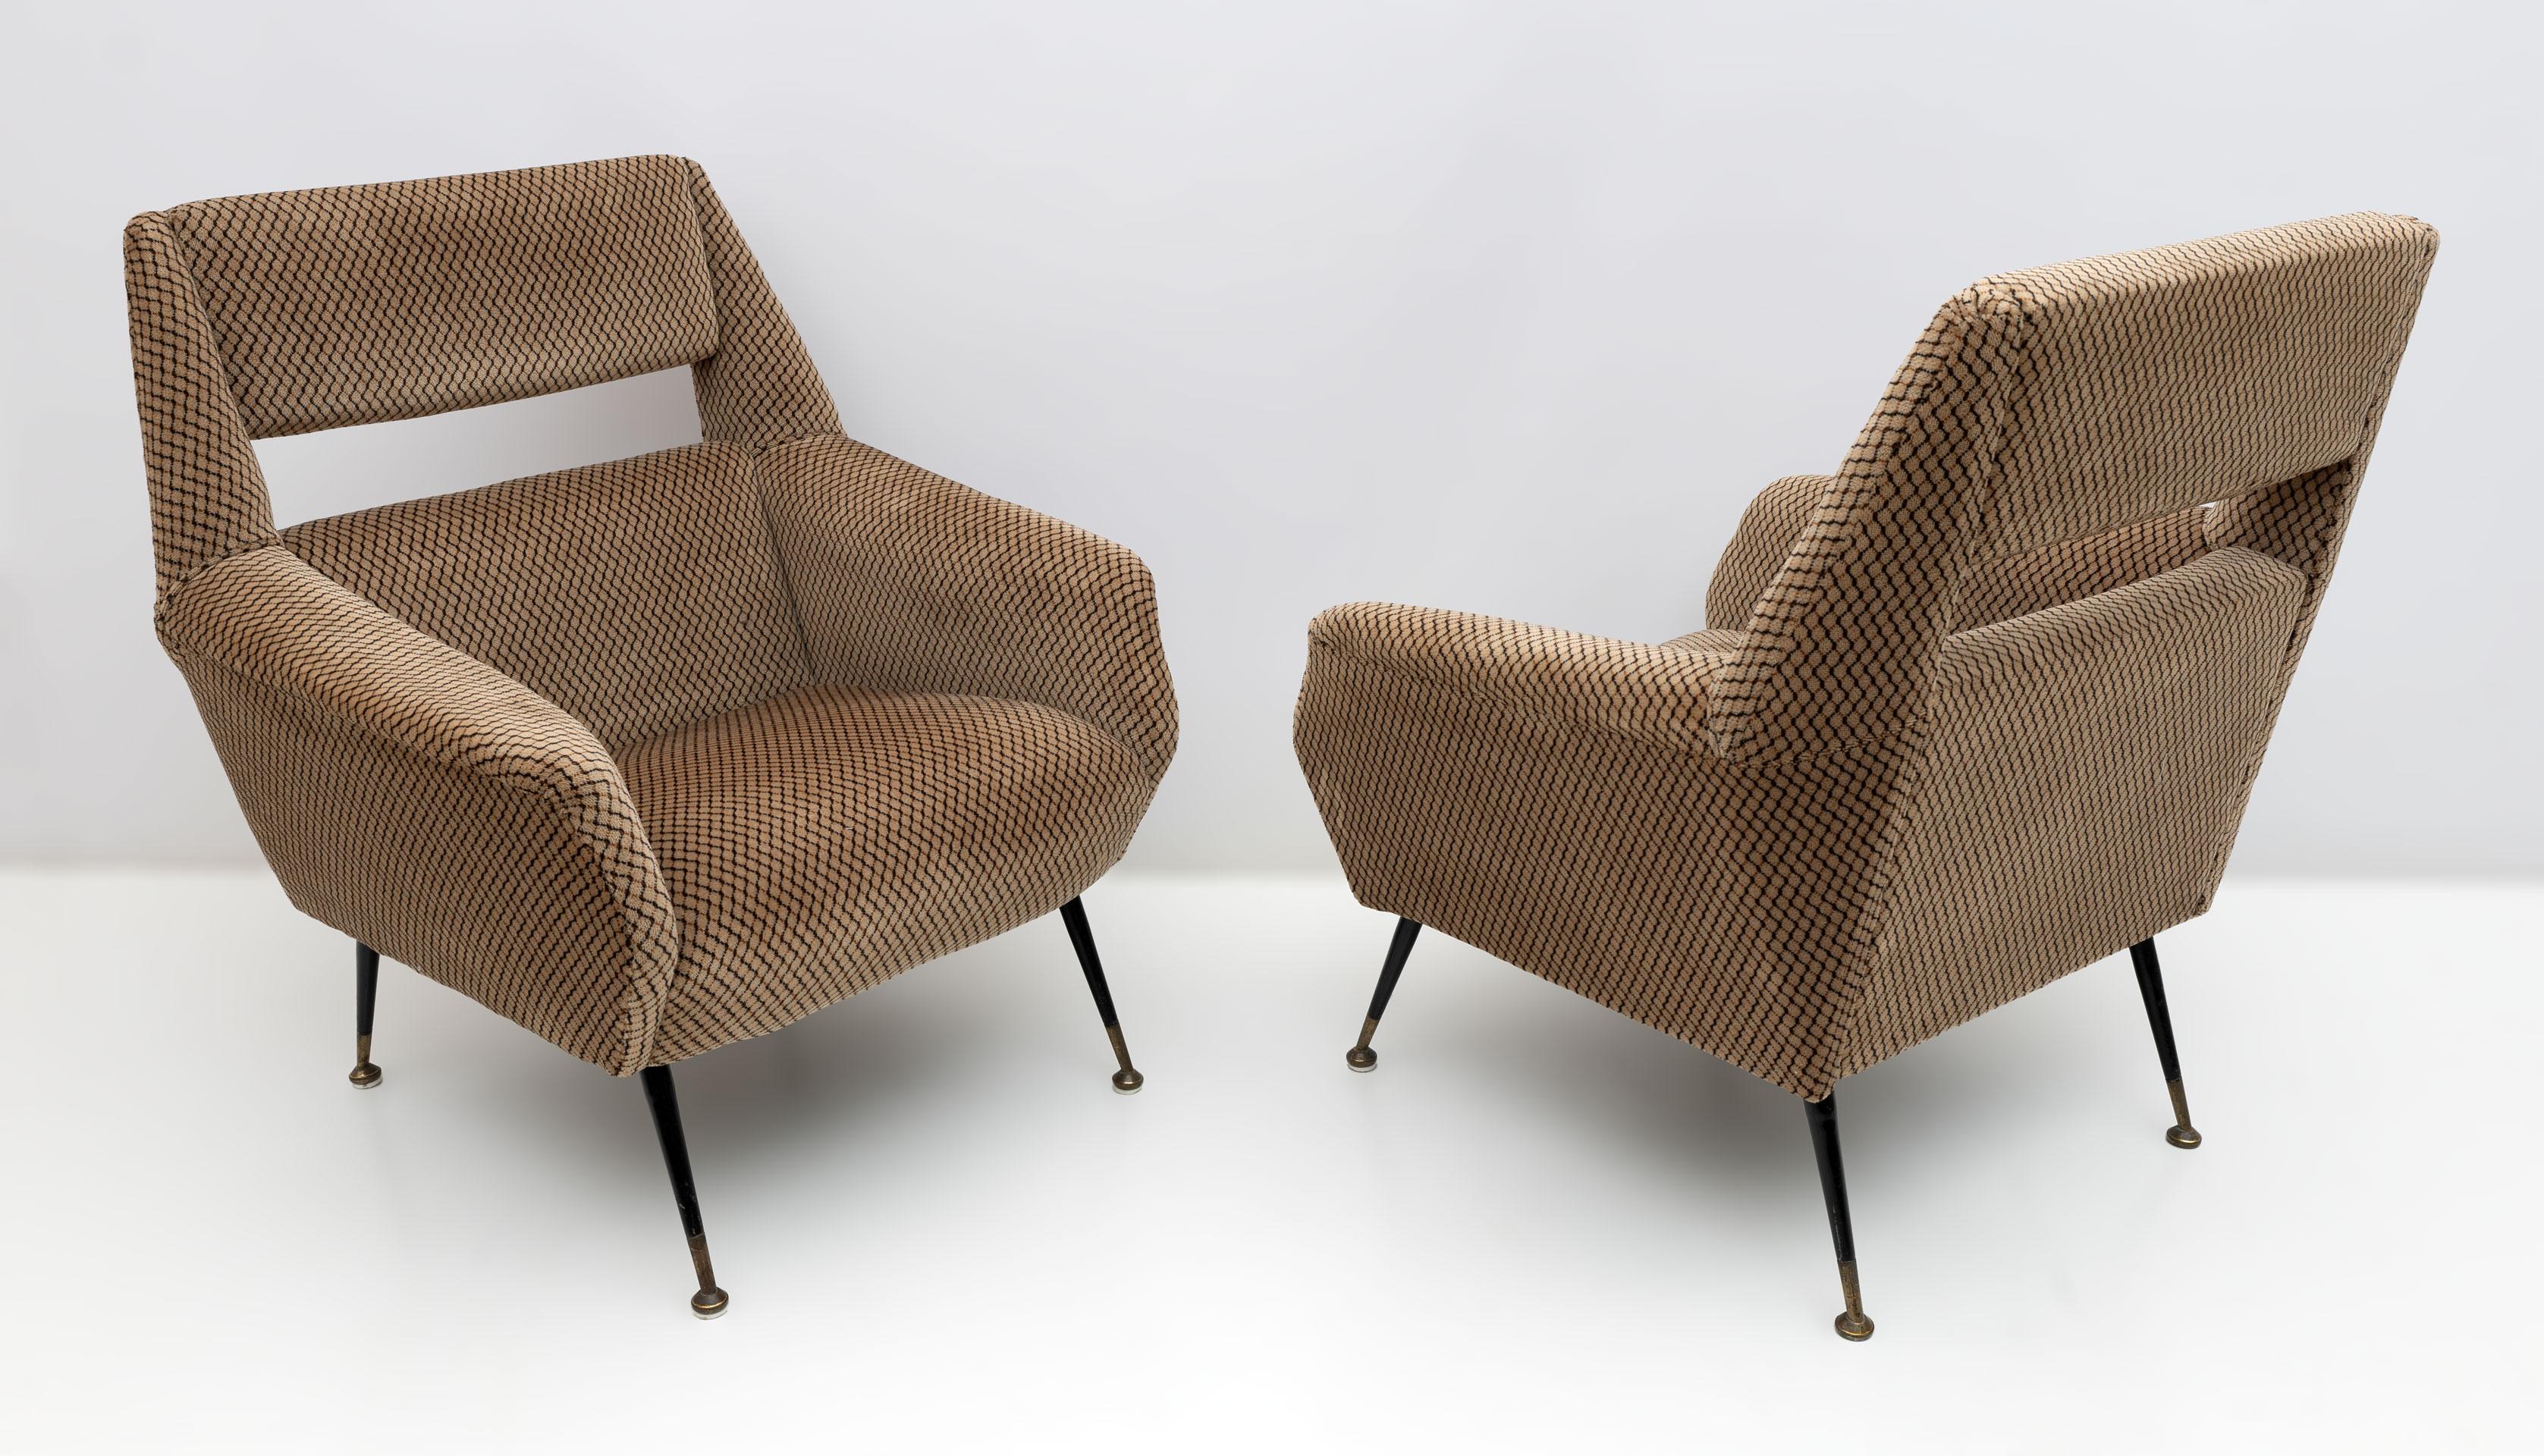 Pair of Gigi Radice Mid-Century Modern Armchairs for Minotti Italia, 1950s For Sale 3